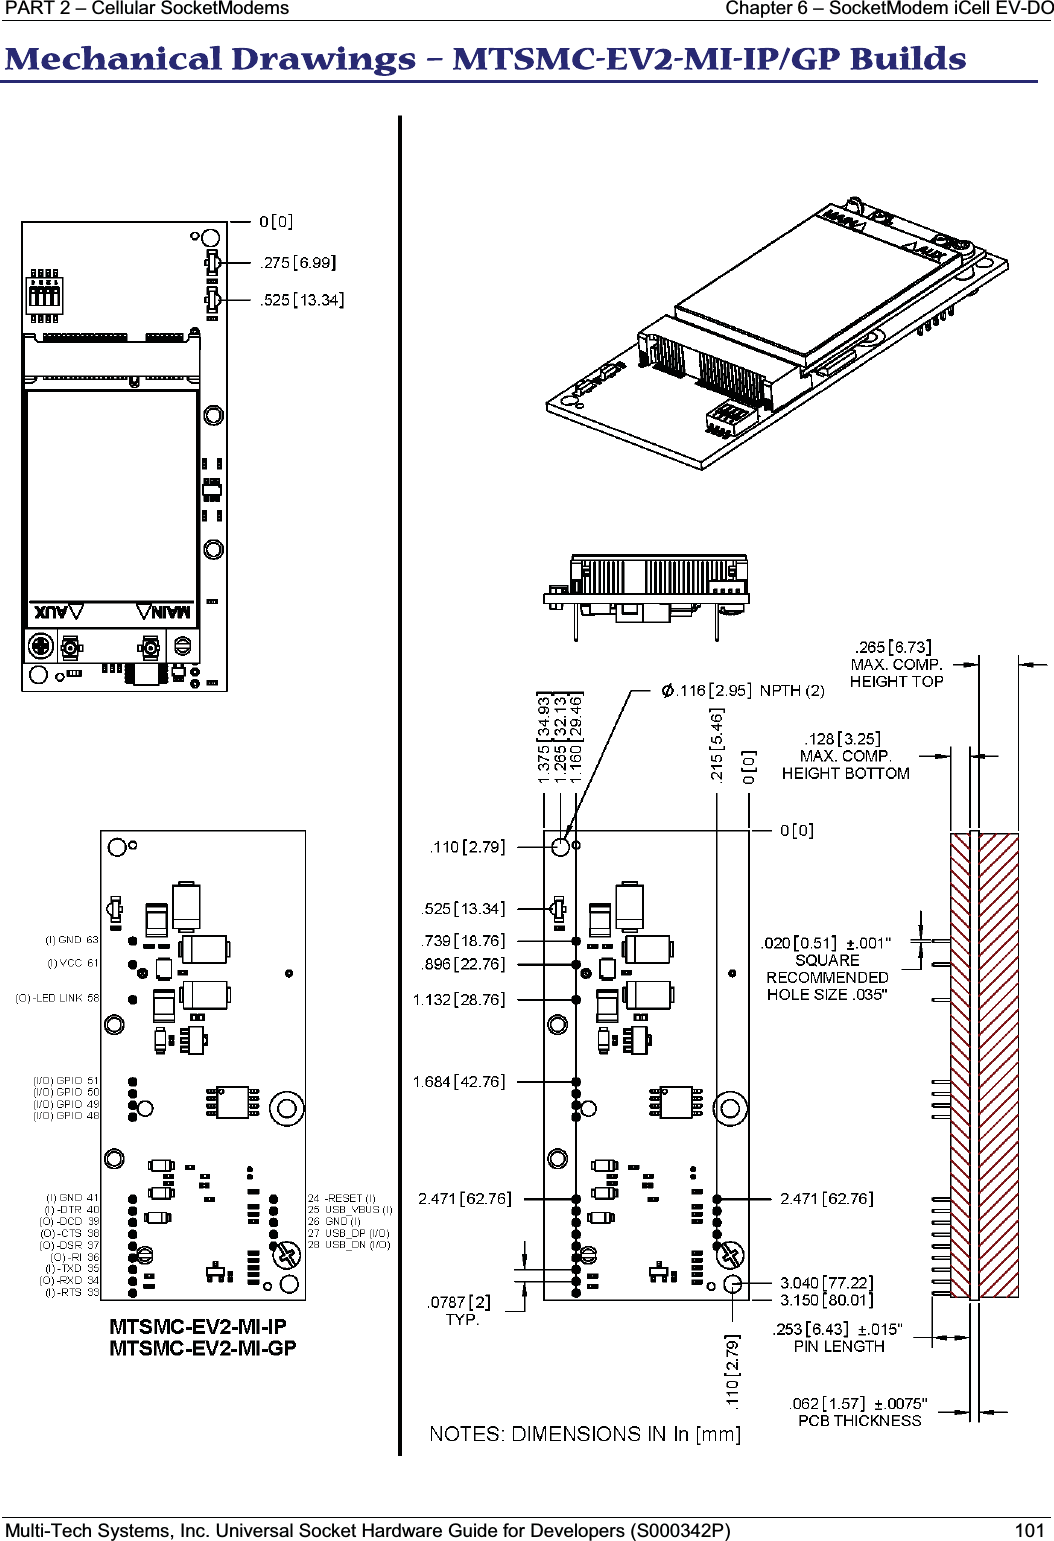 PART 2 – Cellular SocketModems Chapter 6 – SocketModem iCell EV-DOMulti-Tech Systems, Inc. Universal Socket Hardware Guide for Developers (S000342P) 101MMechanical Drawings – MTSMC-EV2-MI-IP/GP Builds 